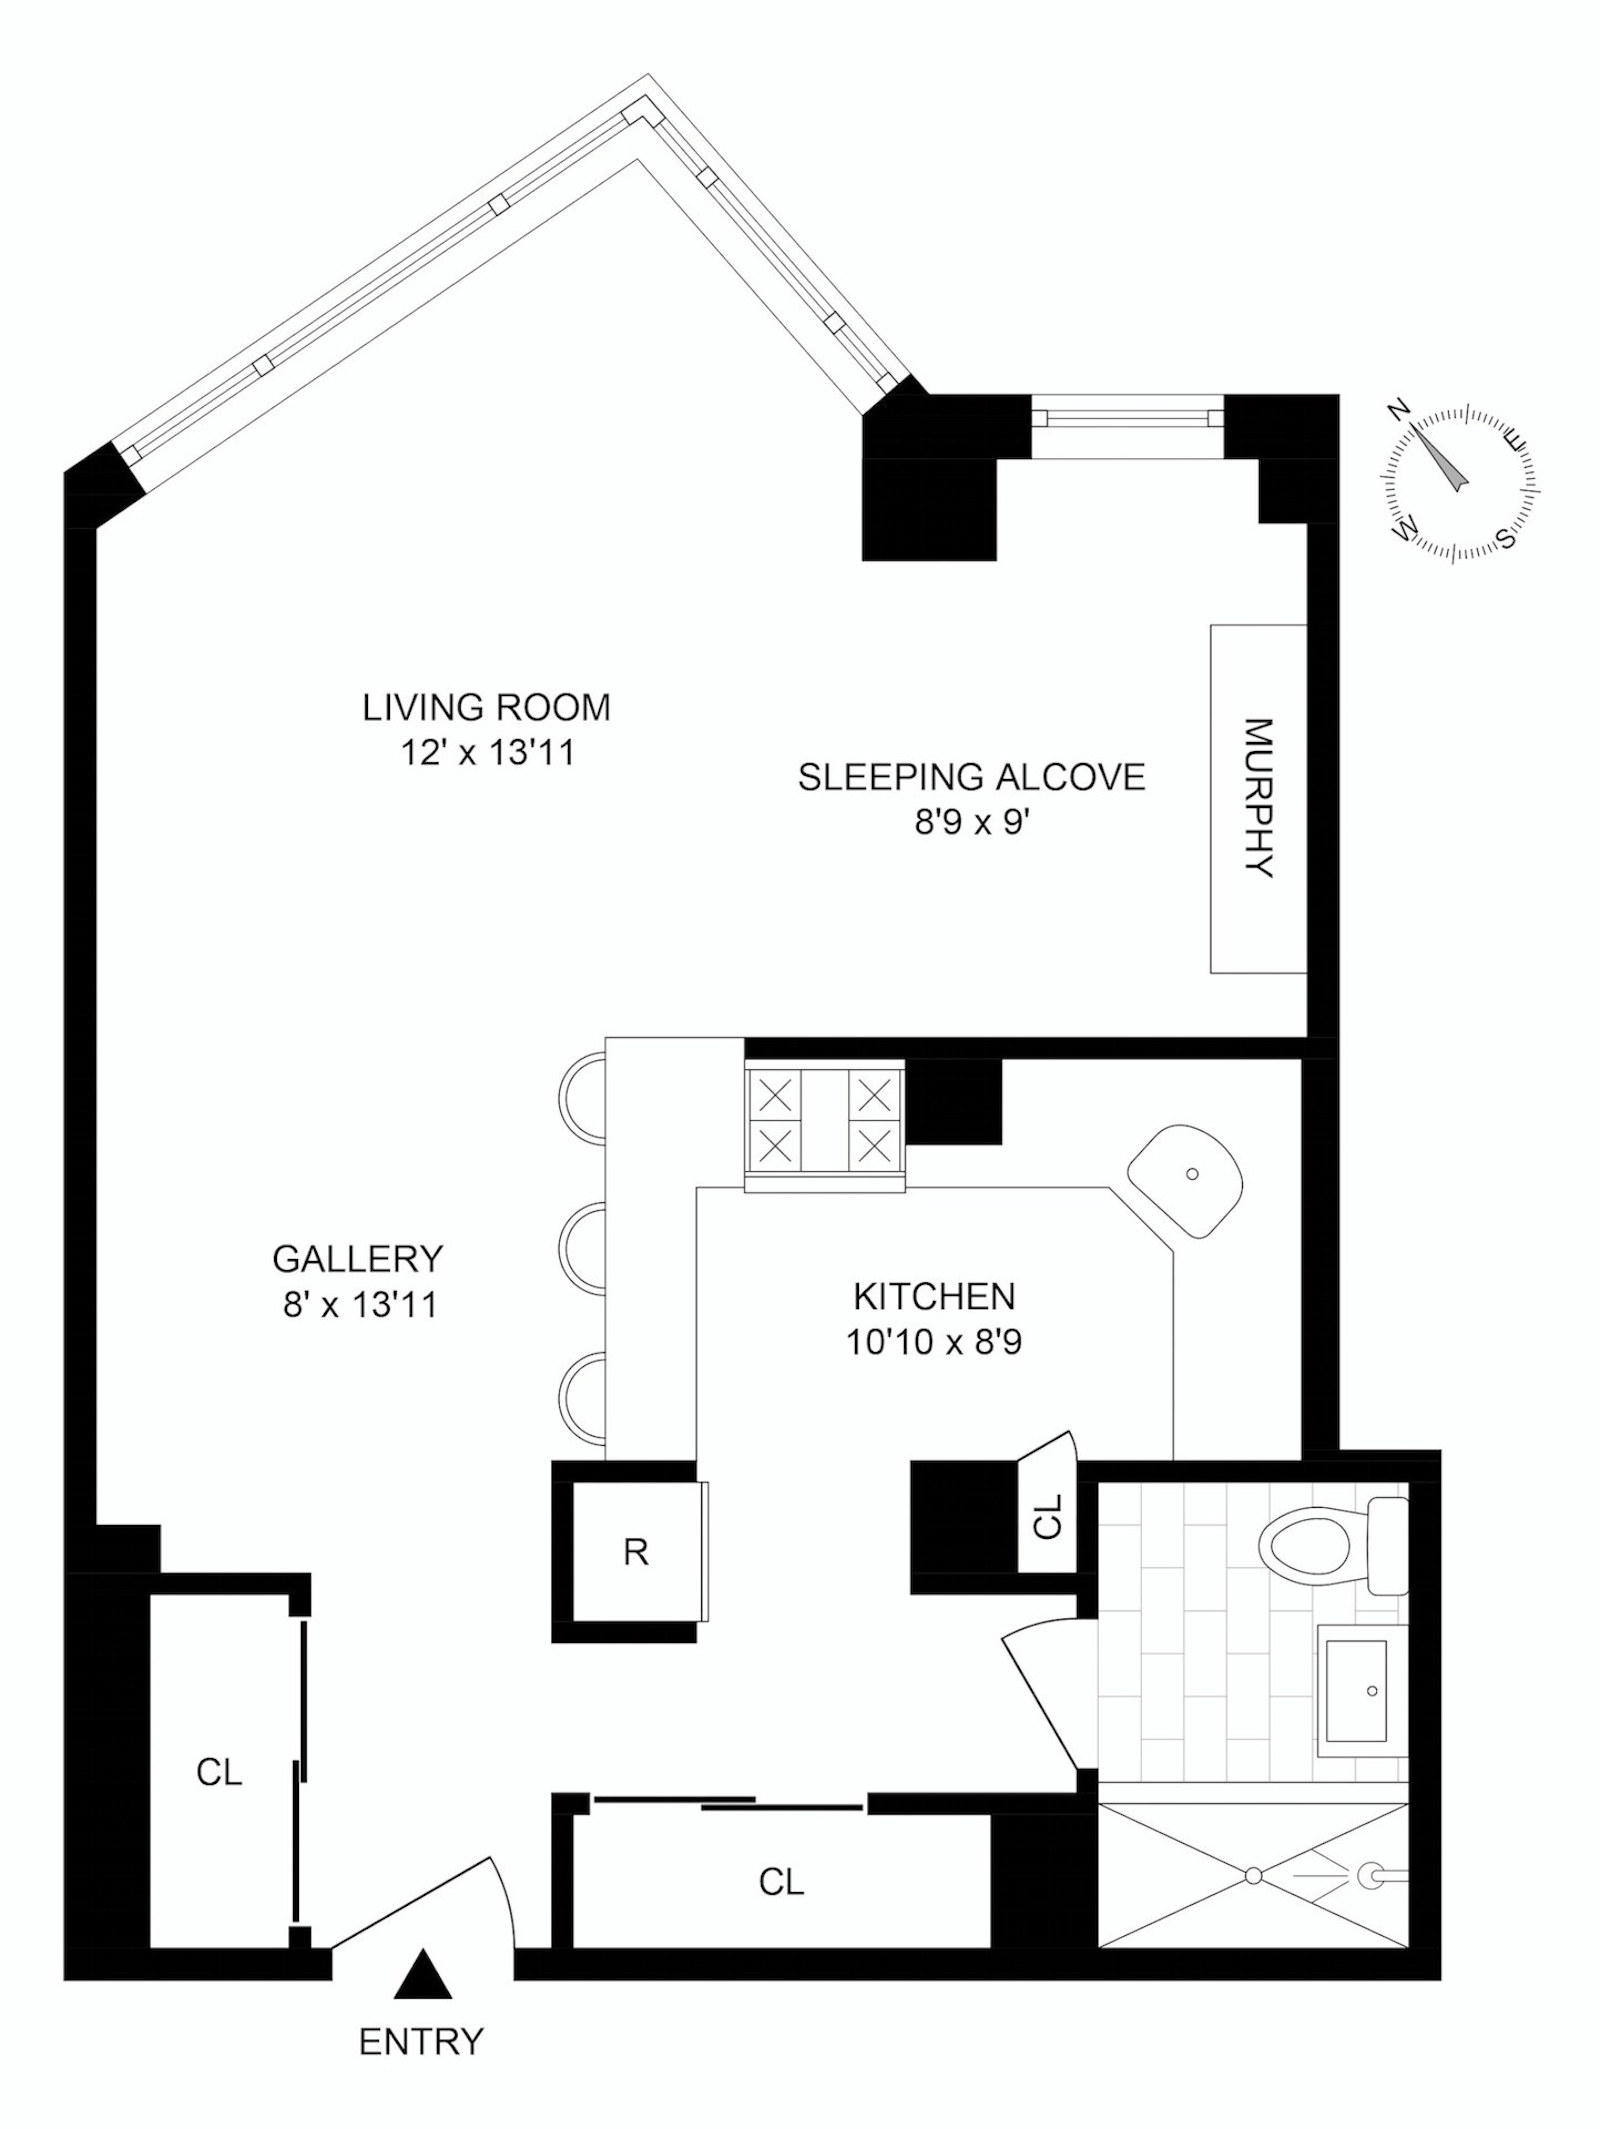 Floorplan for 60 Sutton Place South, 4L/N